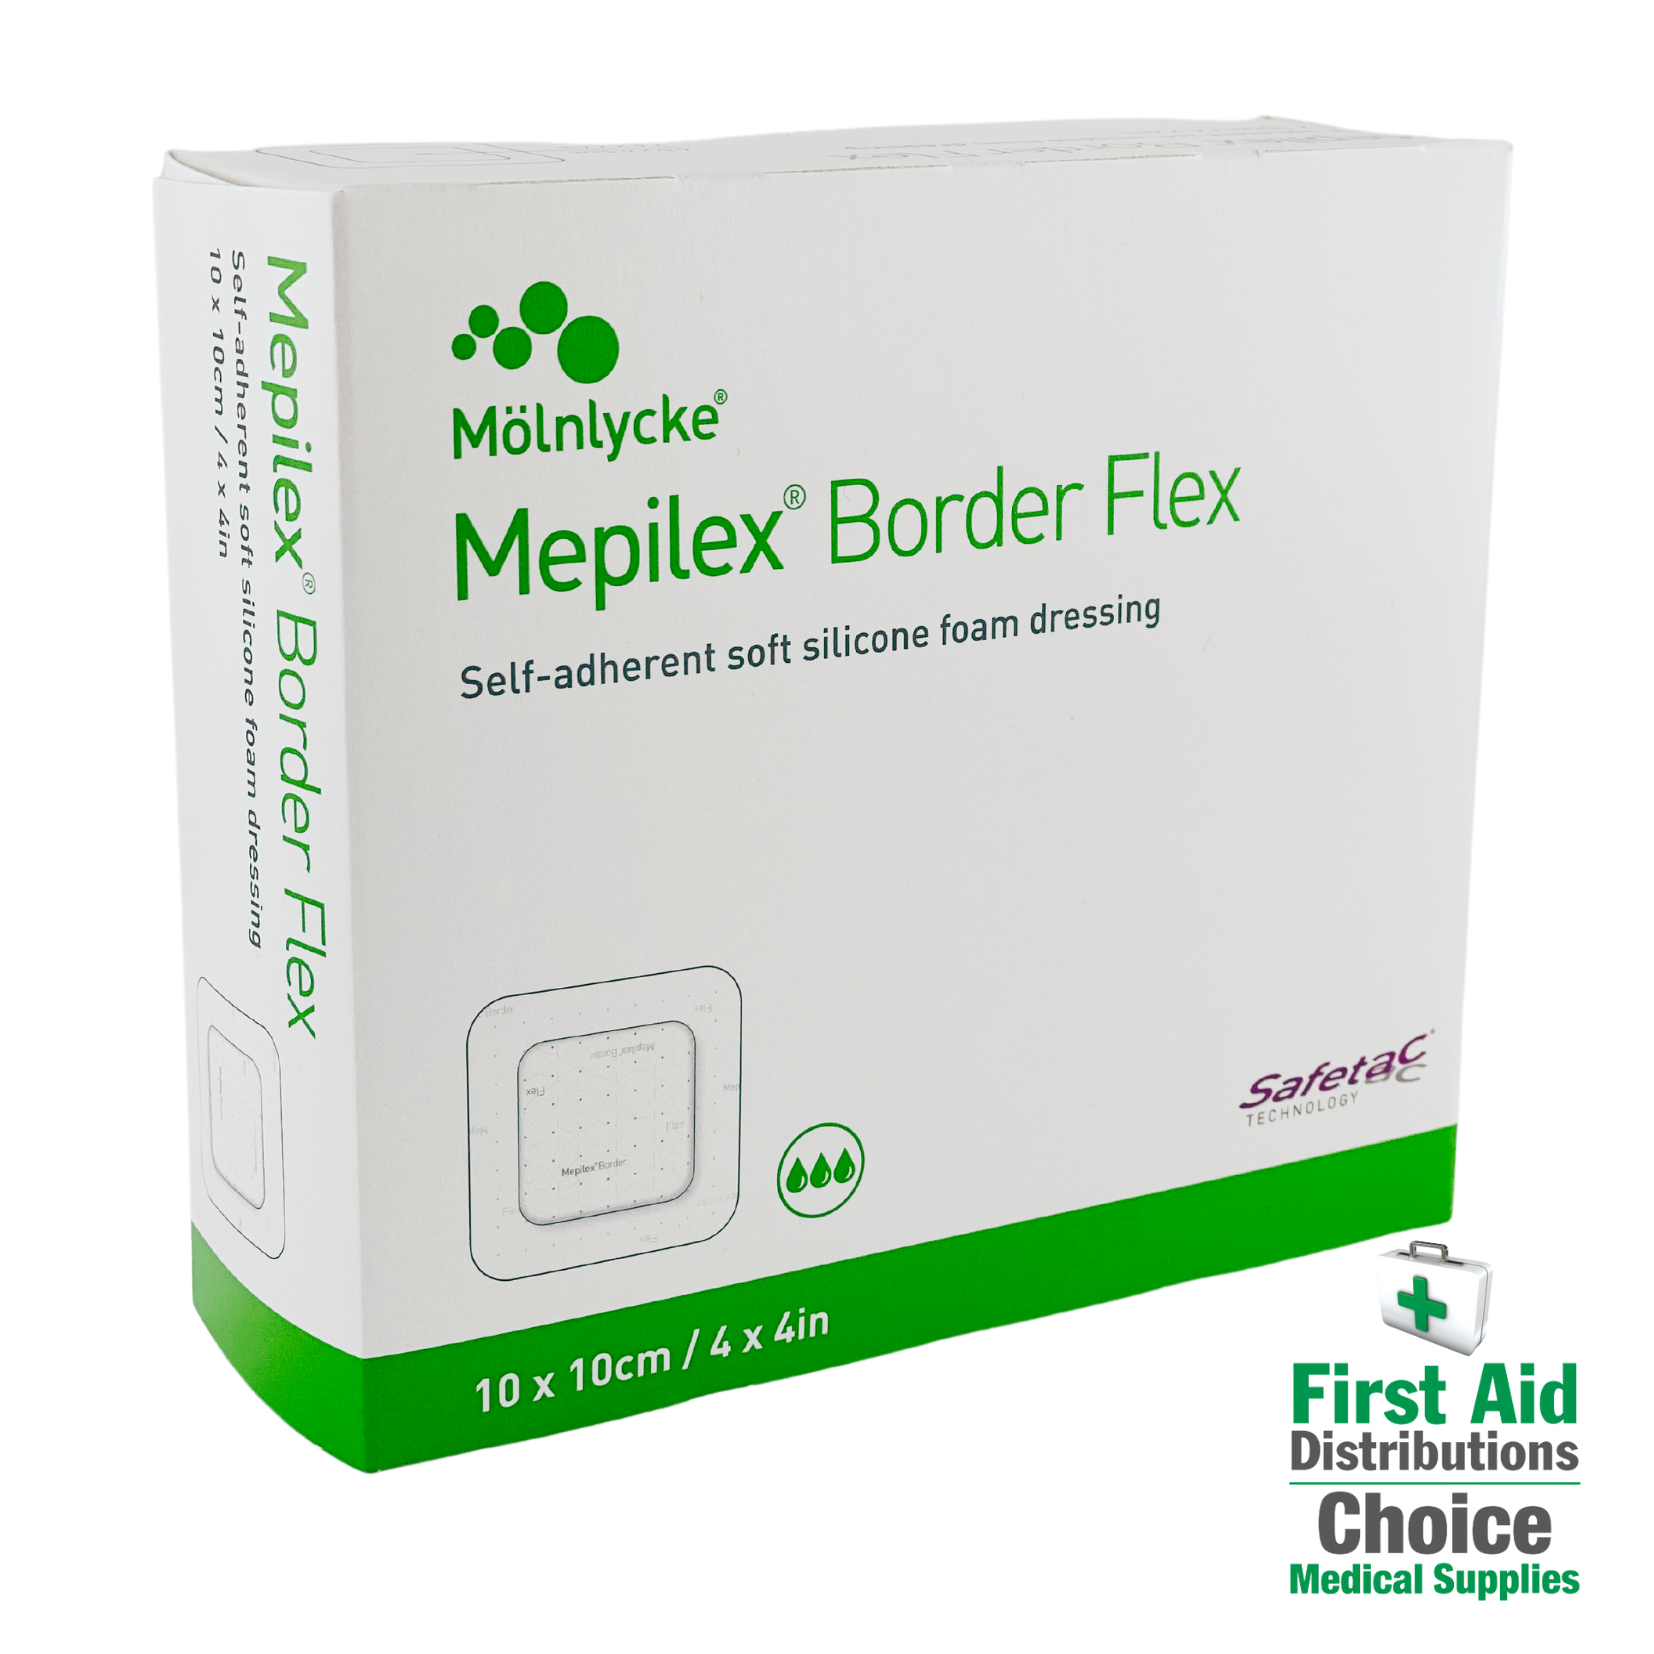 collections/Mepilex_Border_Flex_10cm_x_10cm_Box_First_Aid_Distributions.png